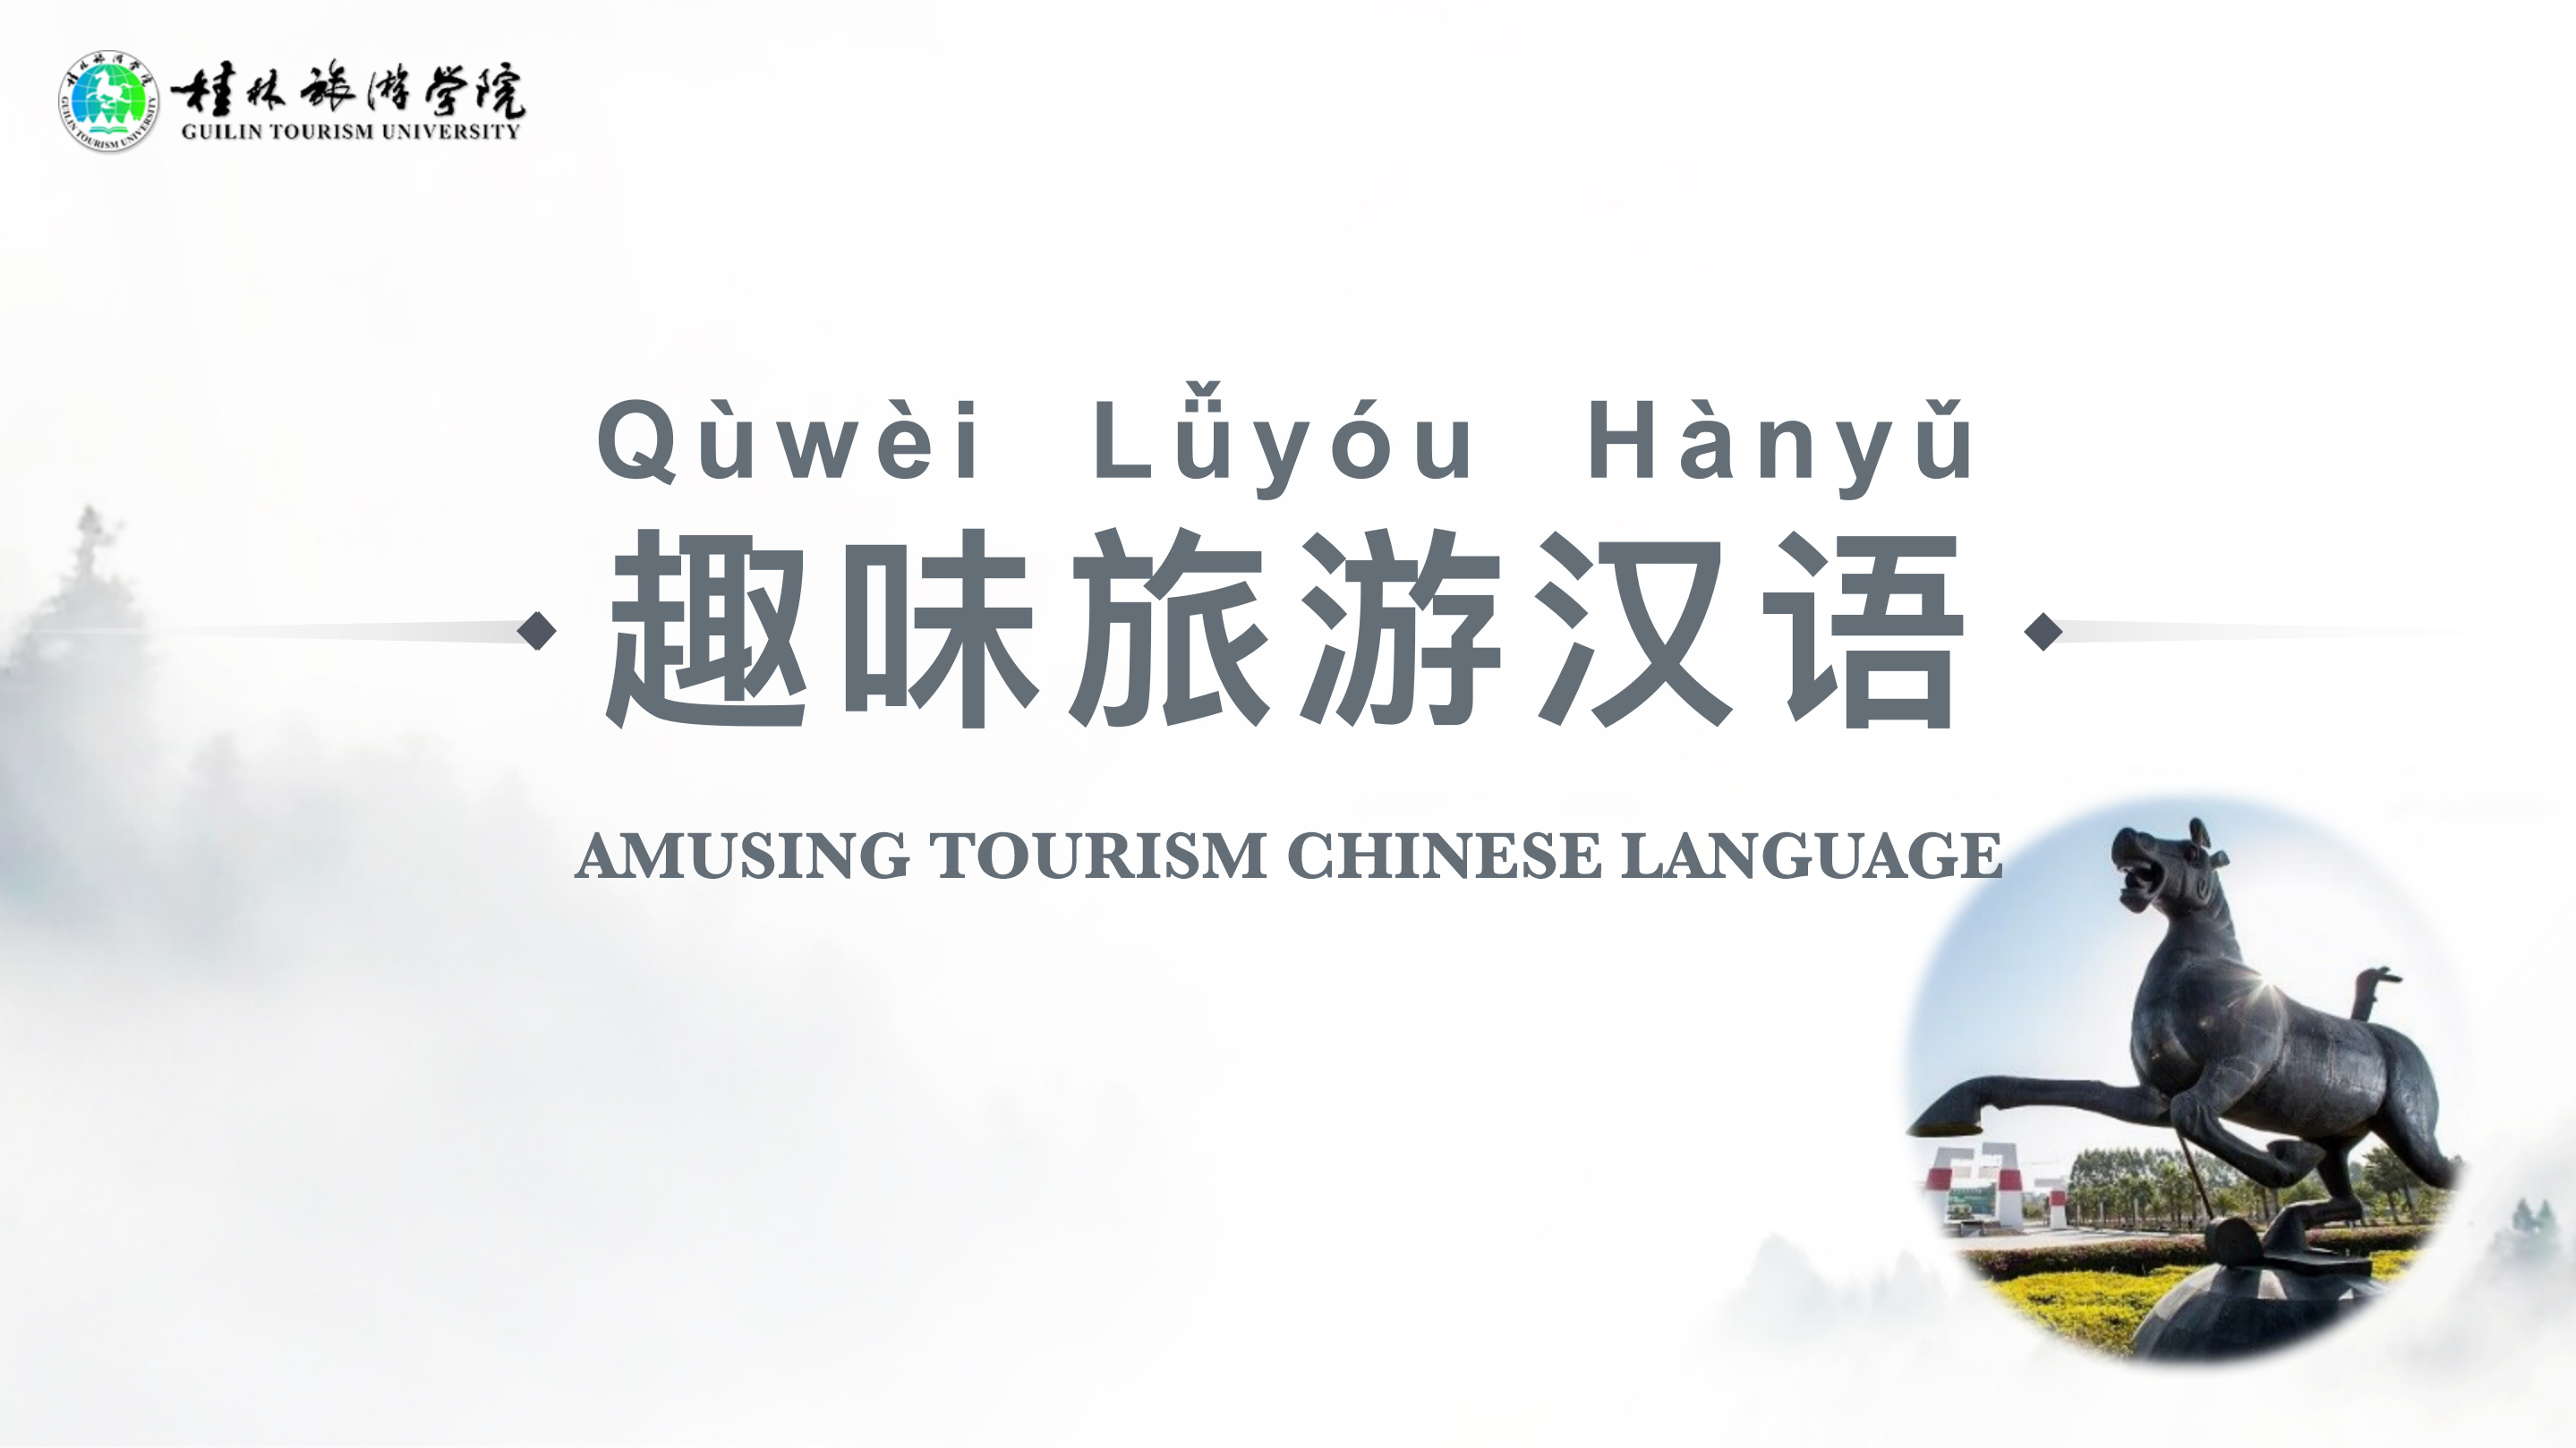 Amusing Tourism Chinese Language Course